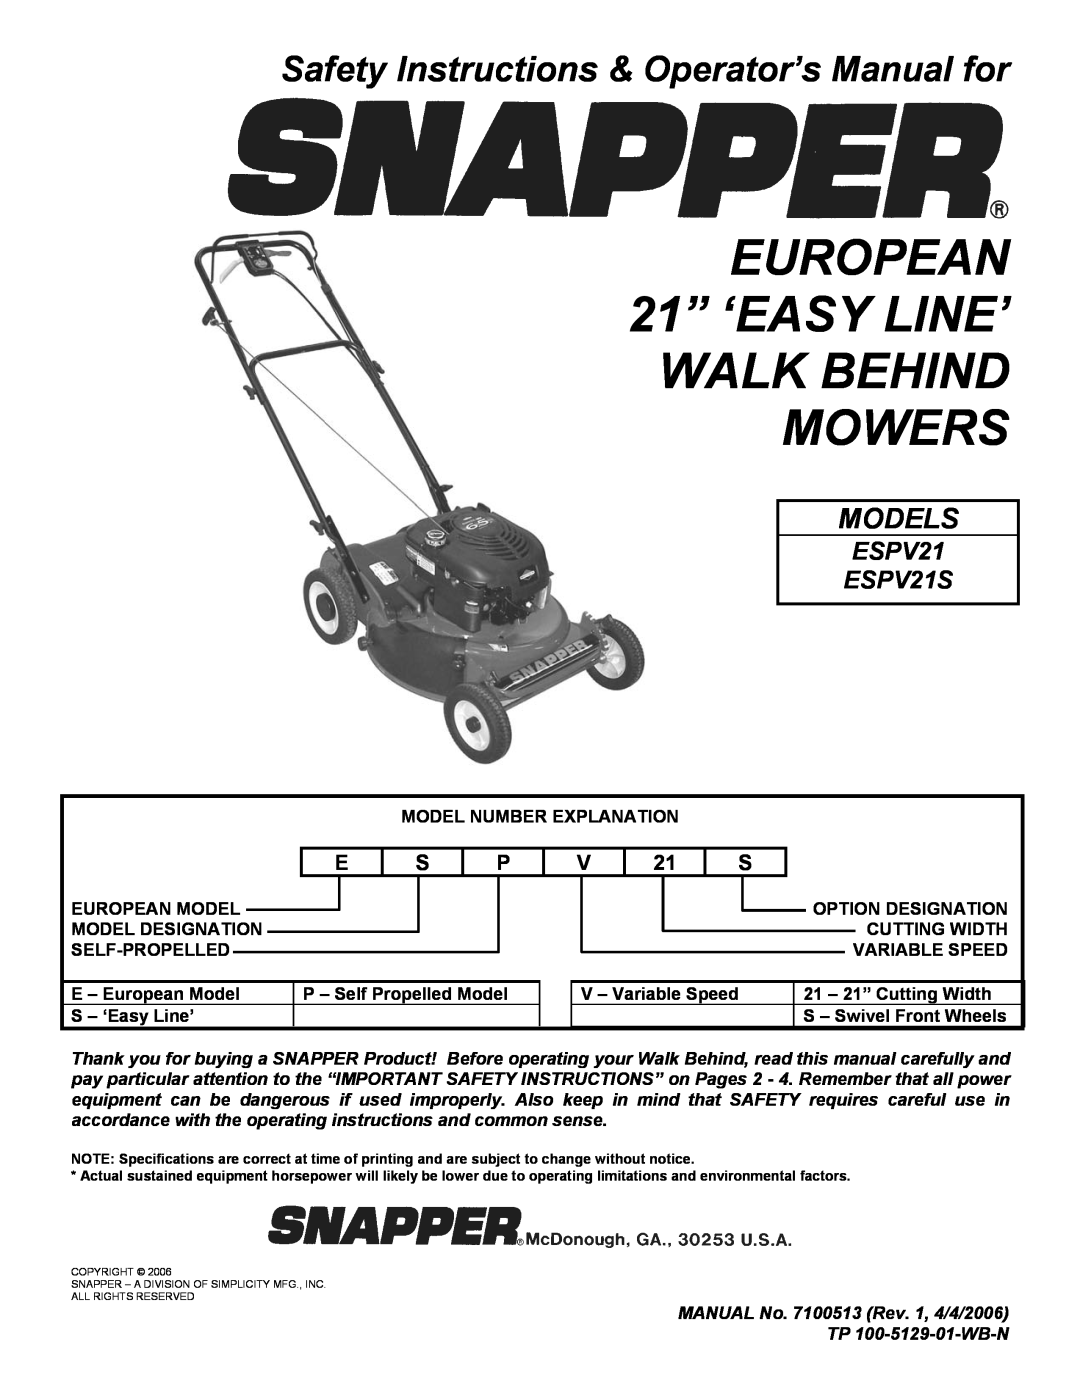 Snapper ESPV21, ESPV21S important safety instructions EUROPEAN 21” ‘EASY LINE’ WALK BEHIND MOWERS, Models, ESPV21 ESPV21S 